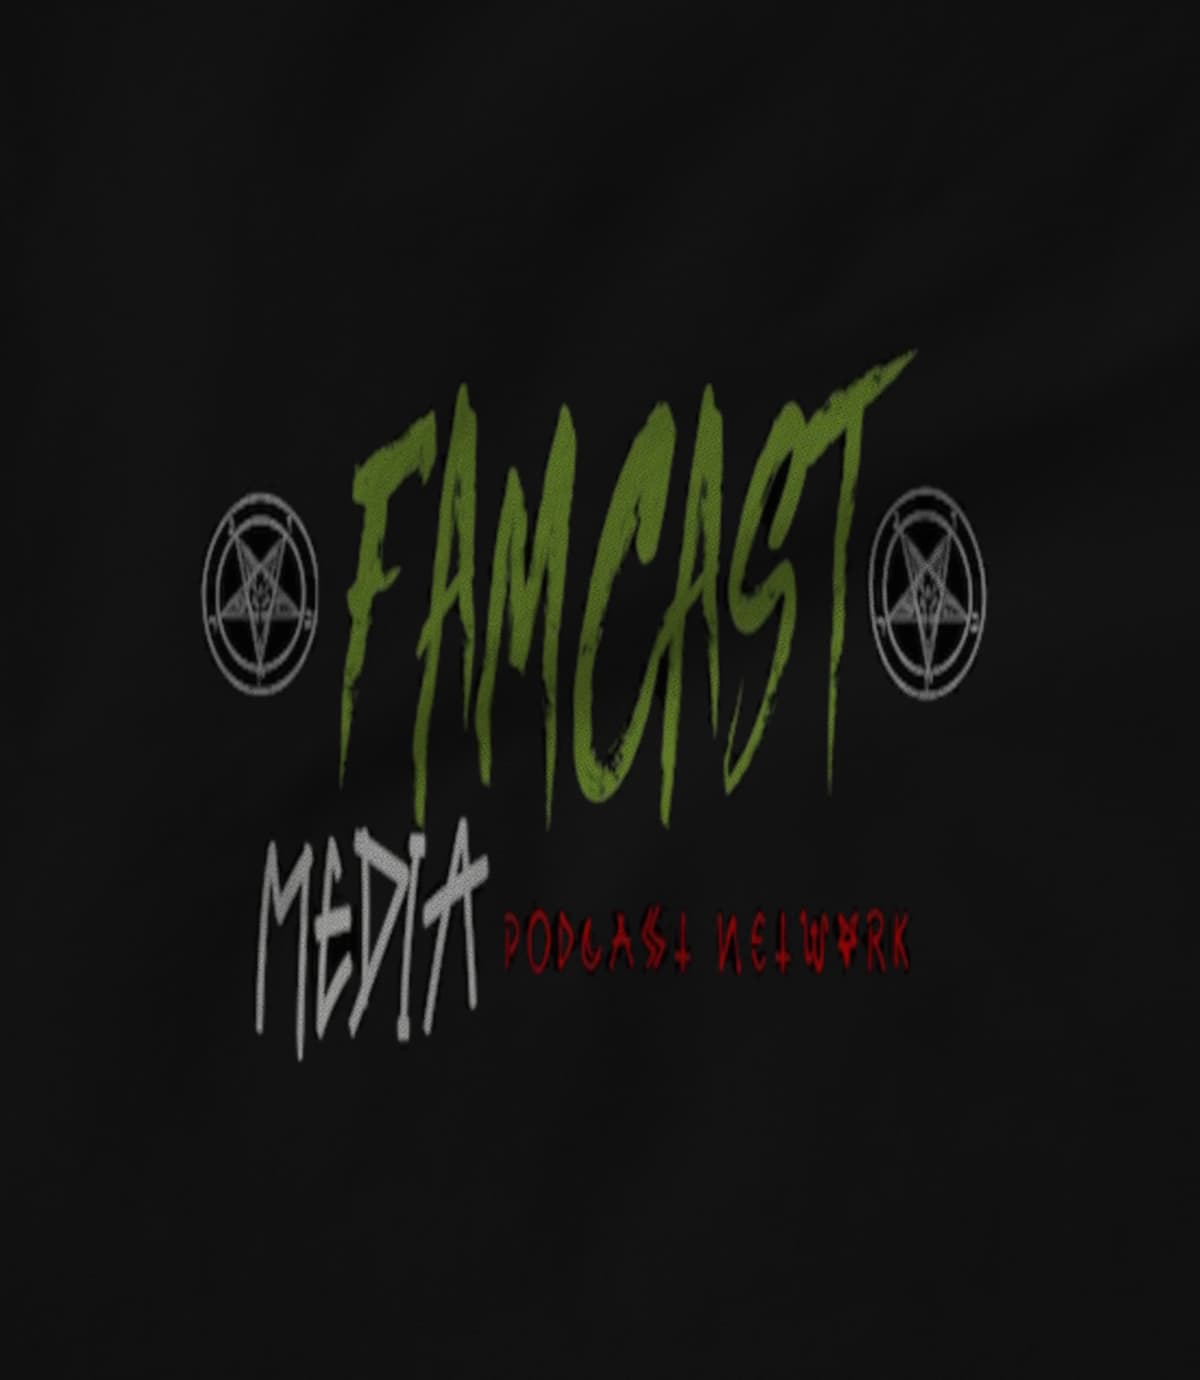 Famcast Media Podcast Network